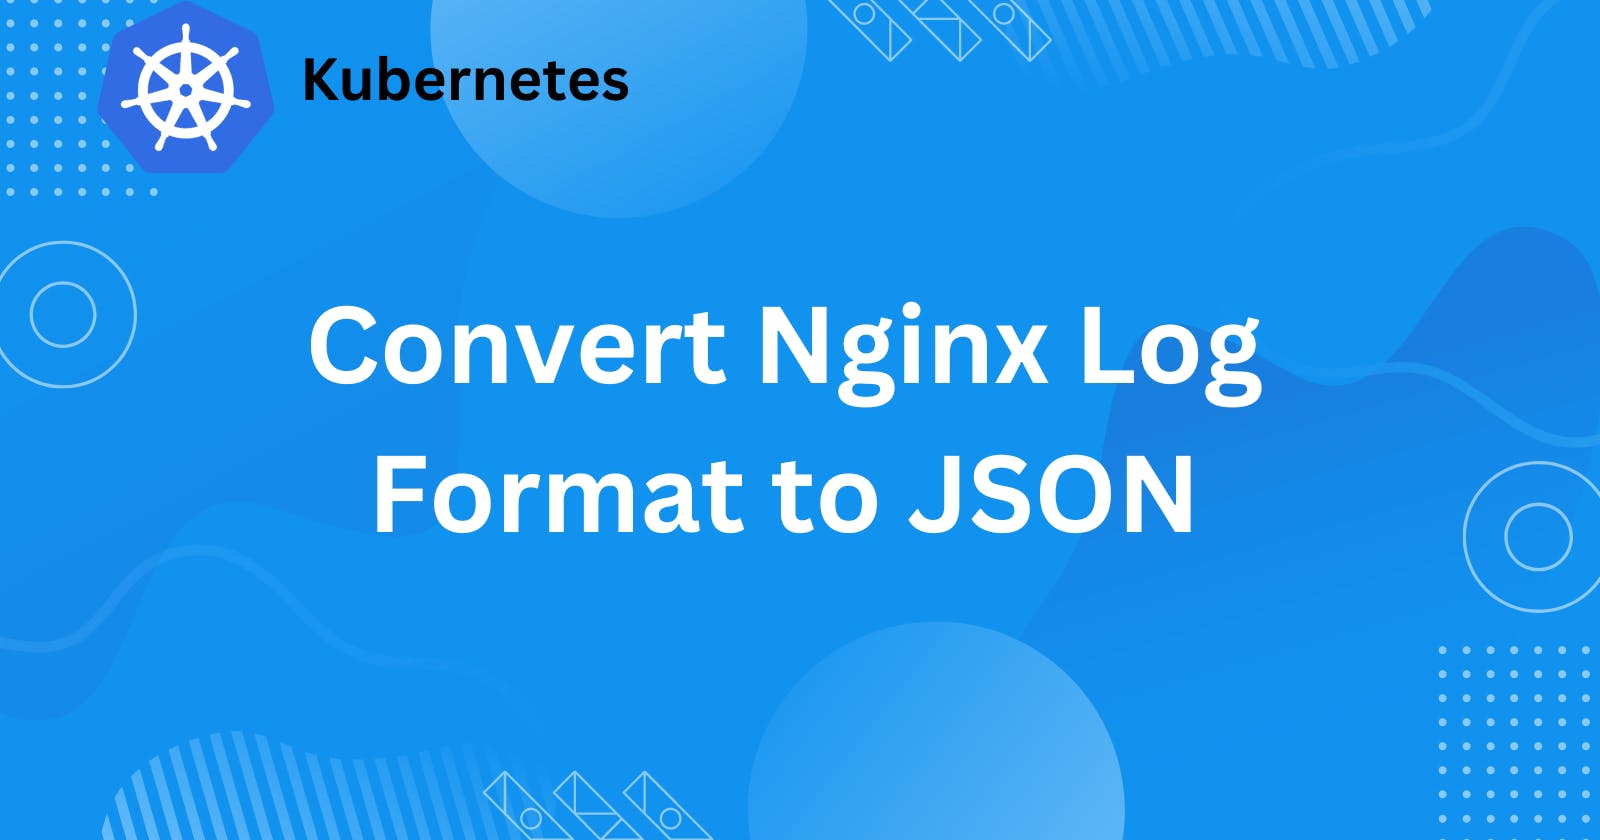 Simplify Nginx logging: Convert Nginx Log Format to JSON